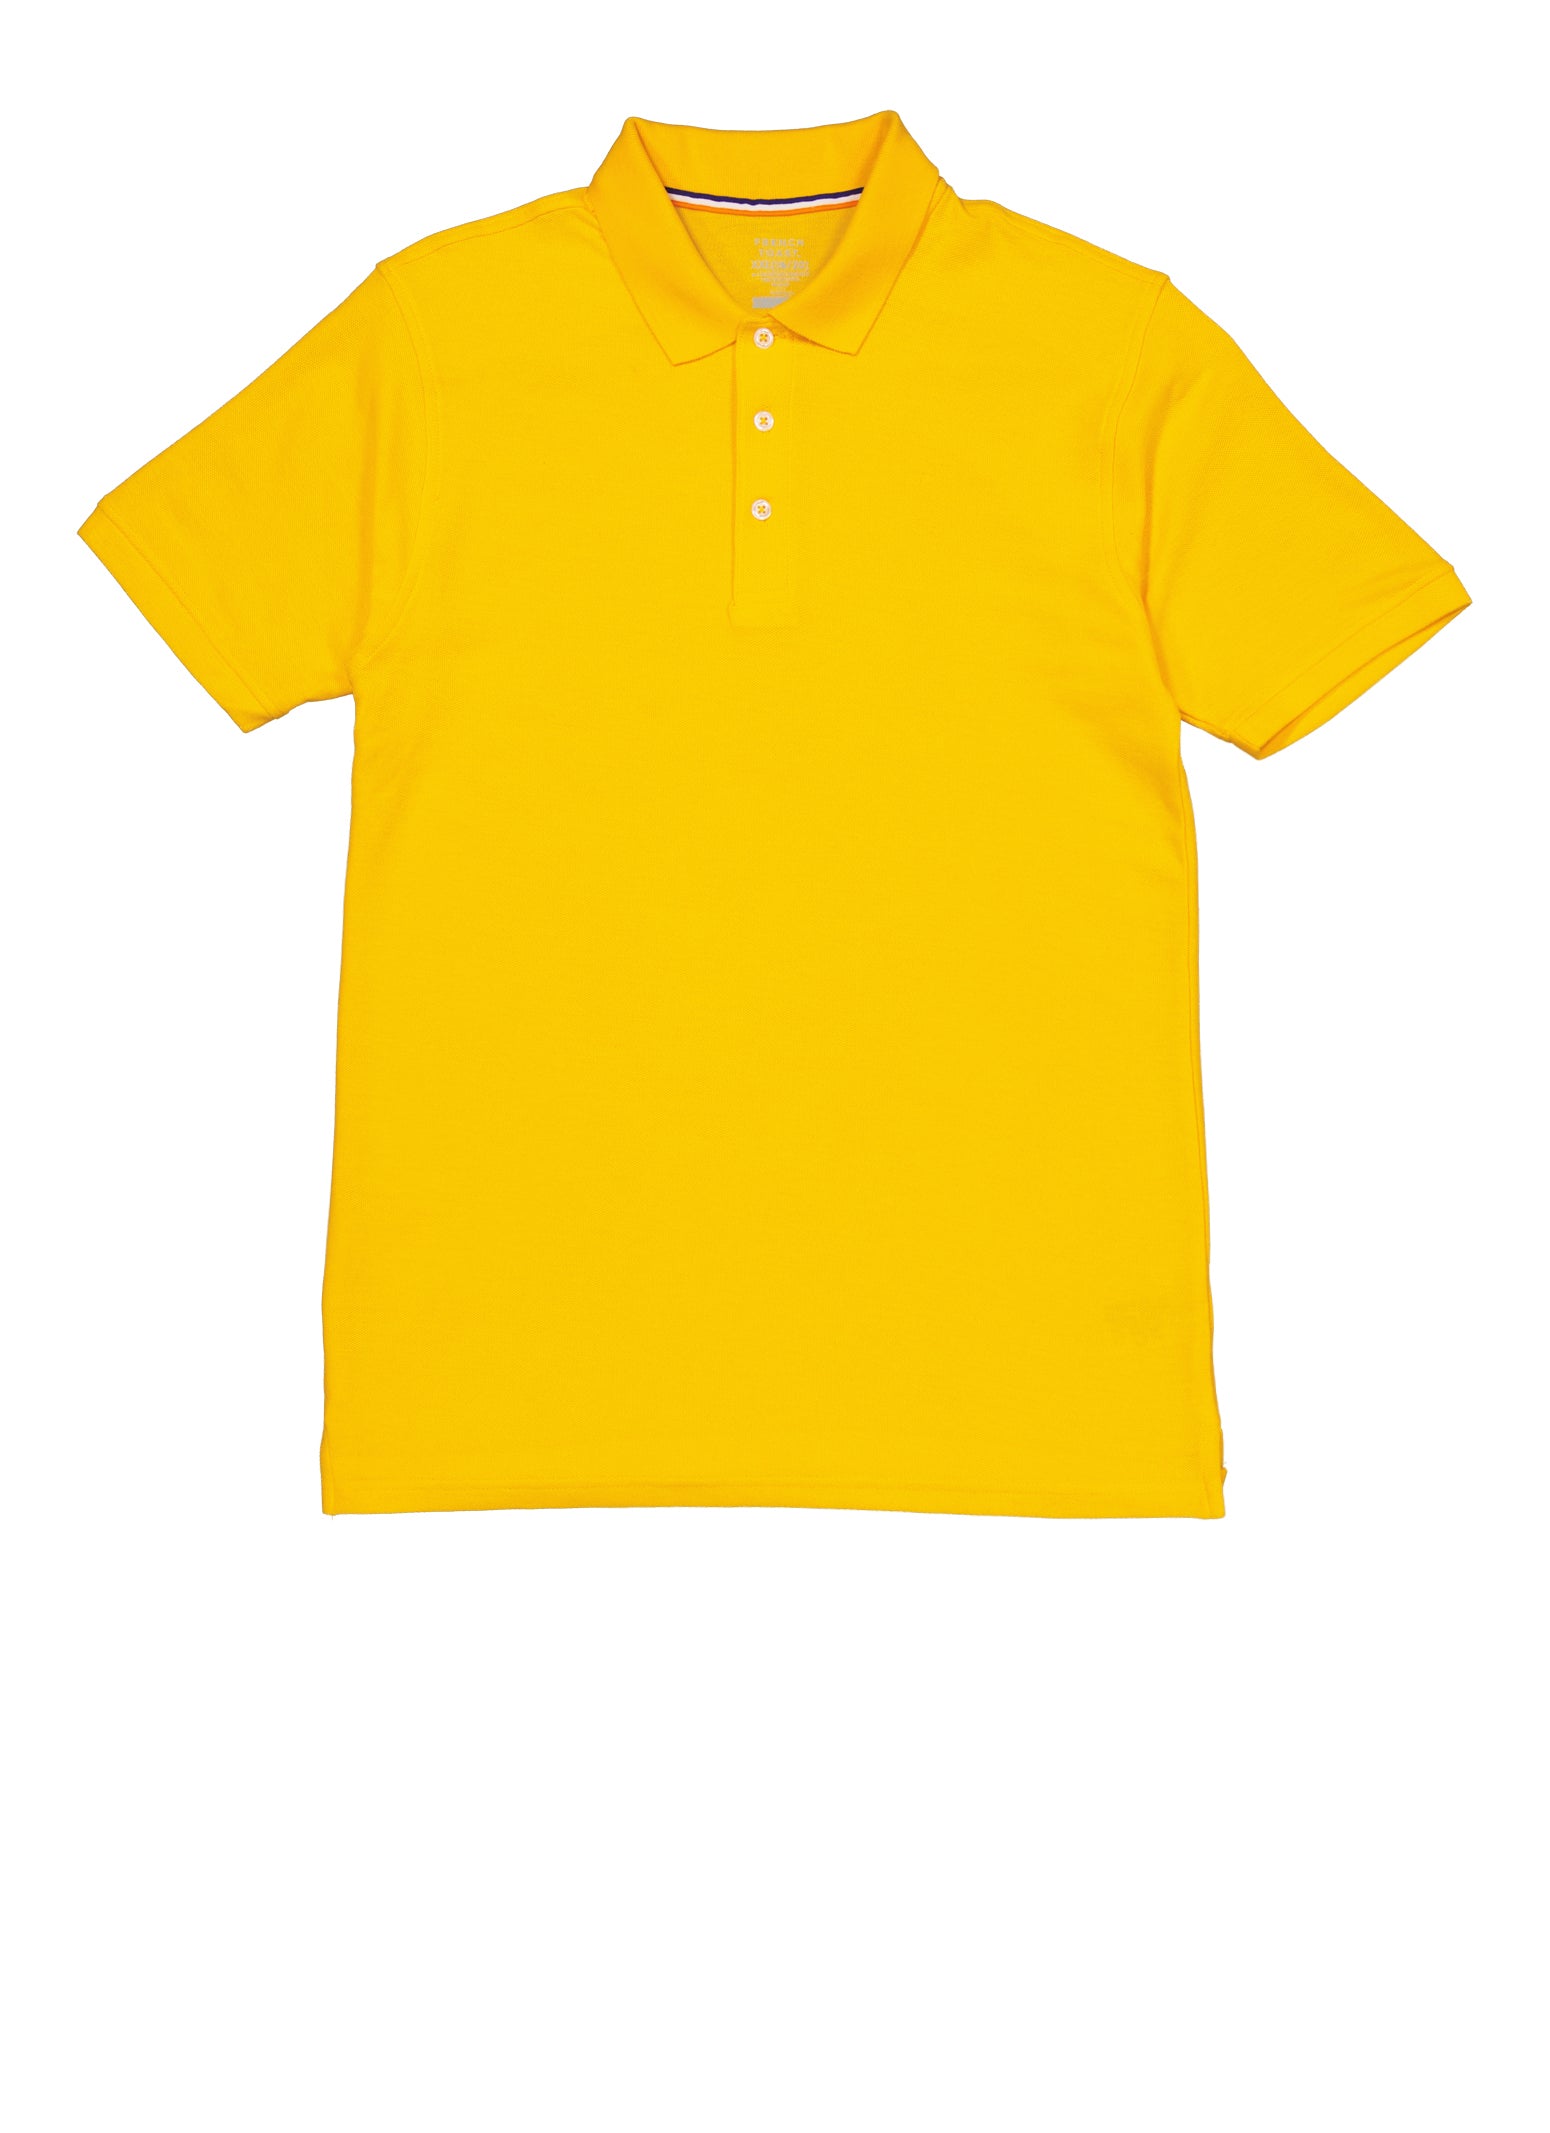 French Toast Boys 18-20 Husky Short Sleeve Polo Shirt, Yellow, Size 18-20